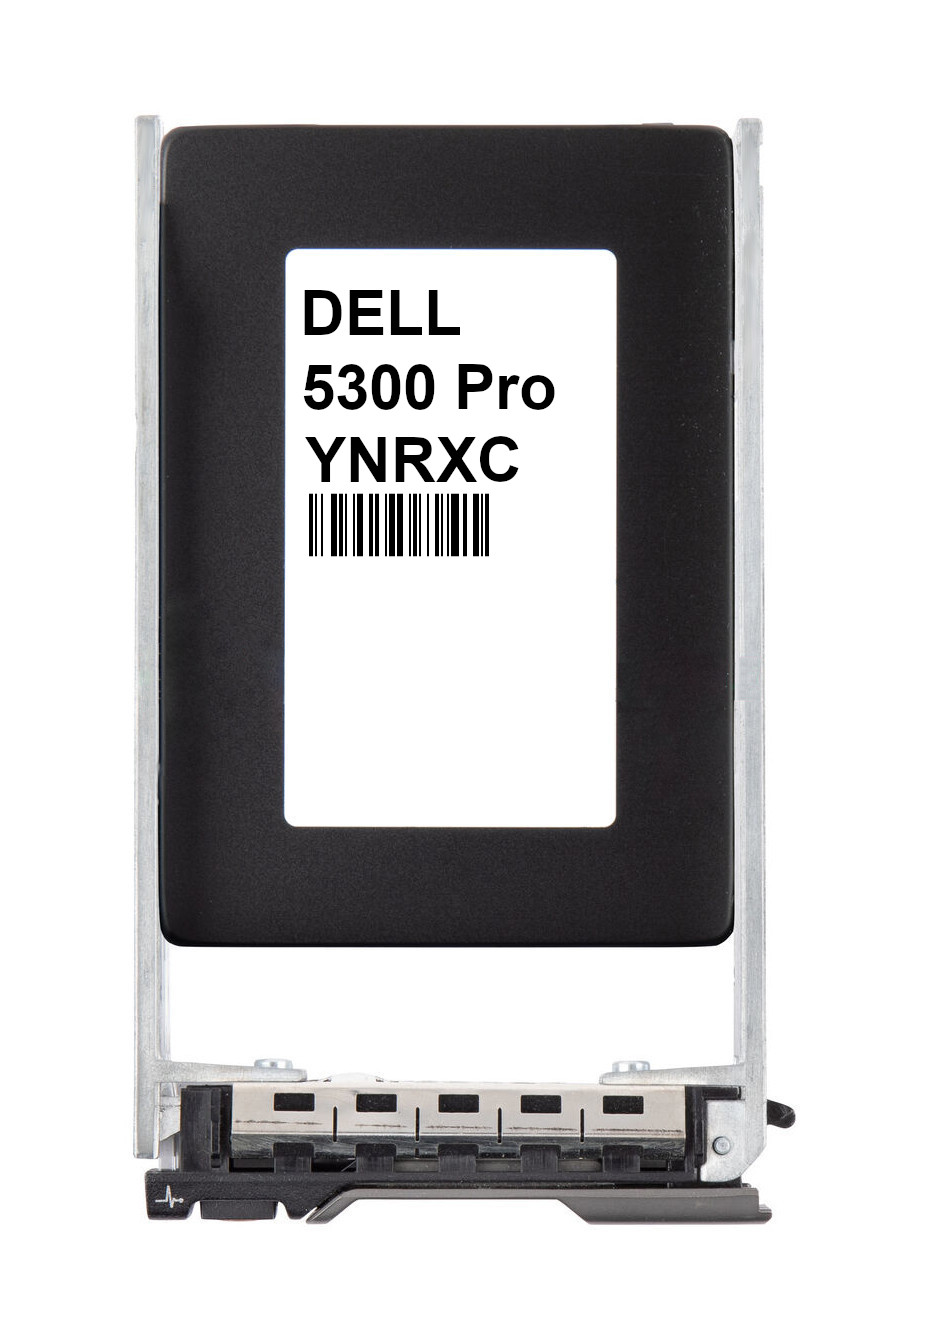 Dell 960GB 5300 Pro SATA 6Gb/s SSD 2.5" YNRXC